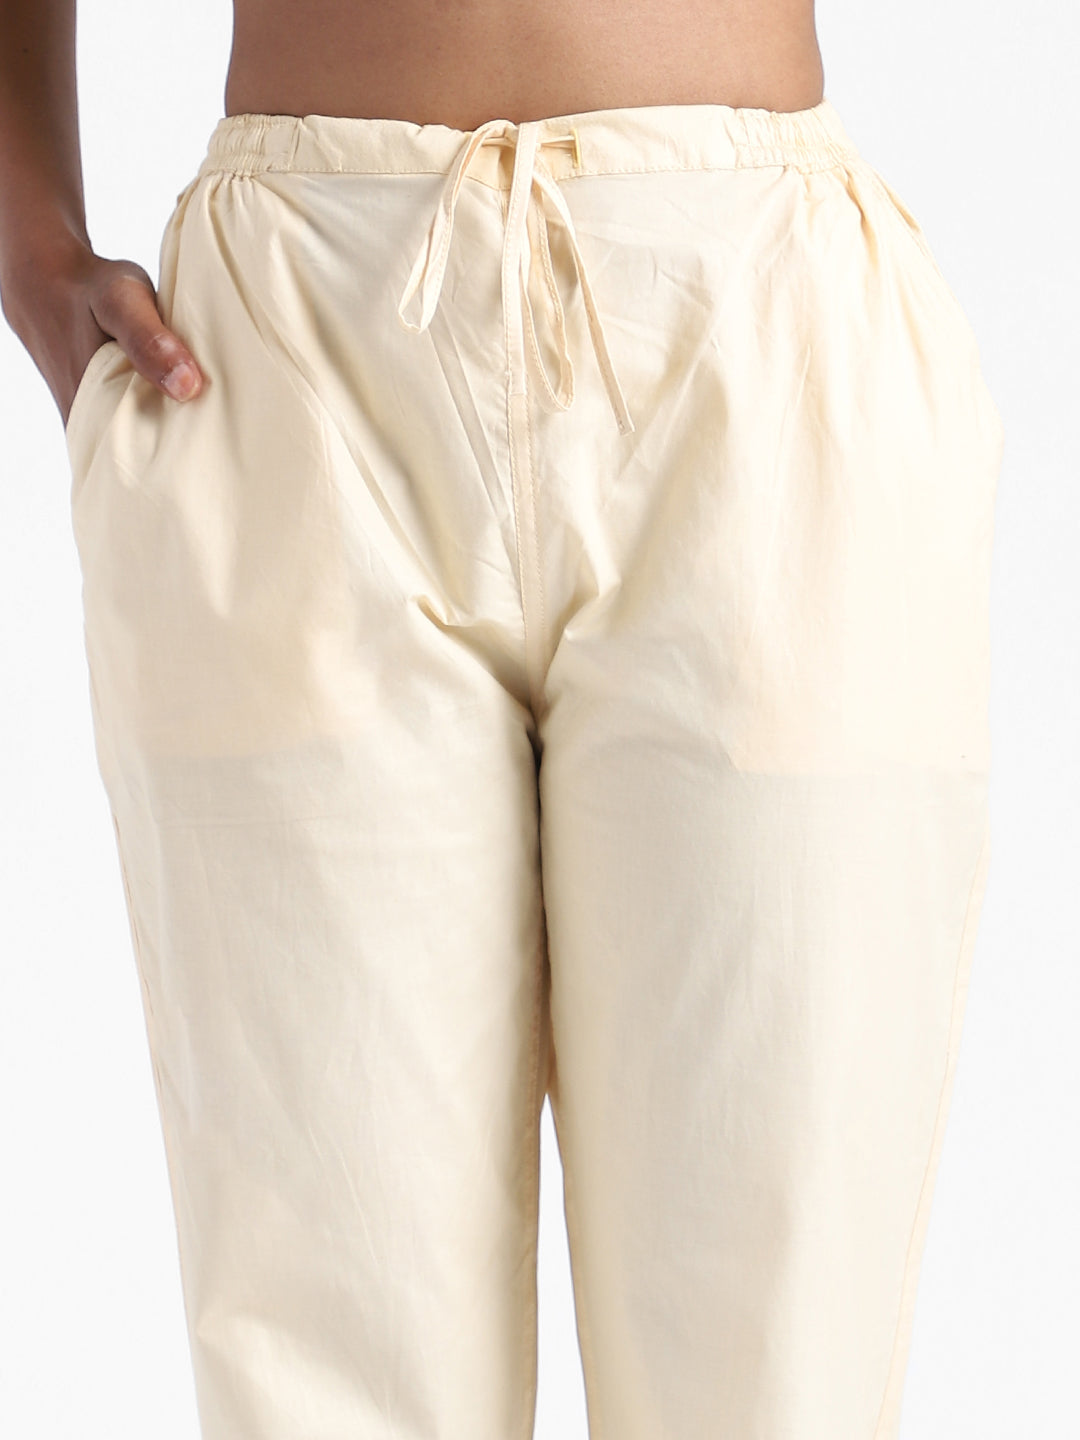 Rust Cream Women's Organic Cotton & Natural Dyed Slim Fit Pants